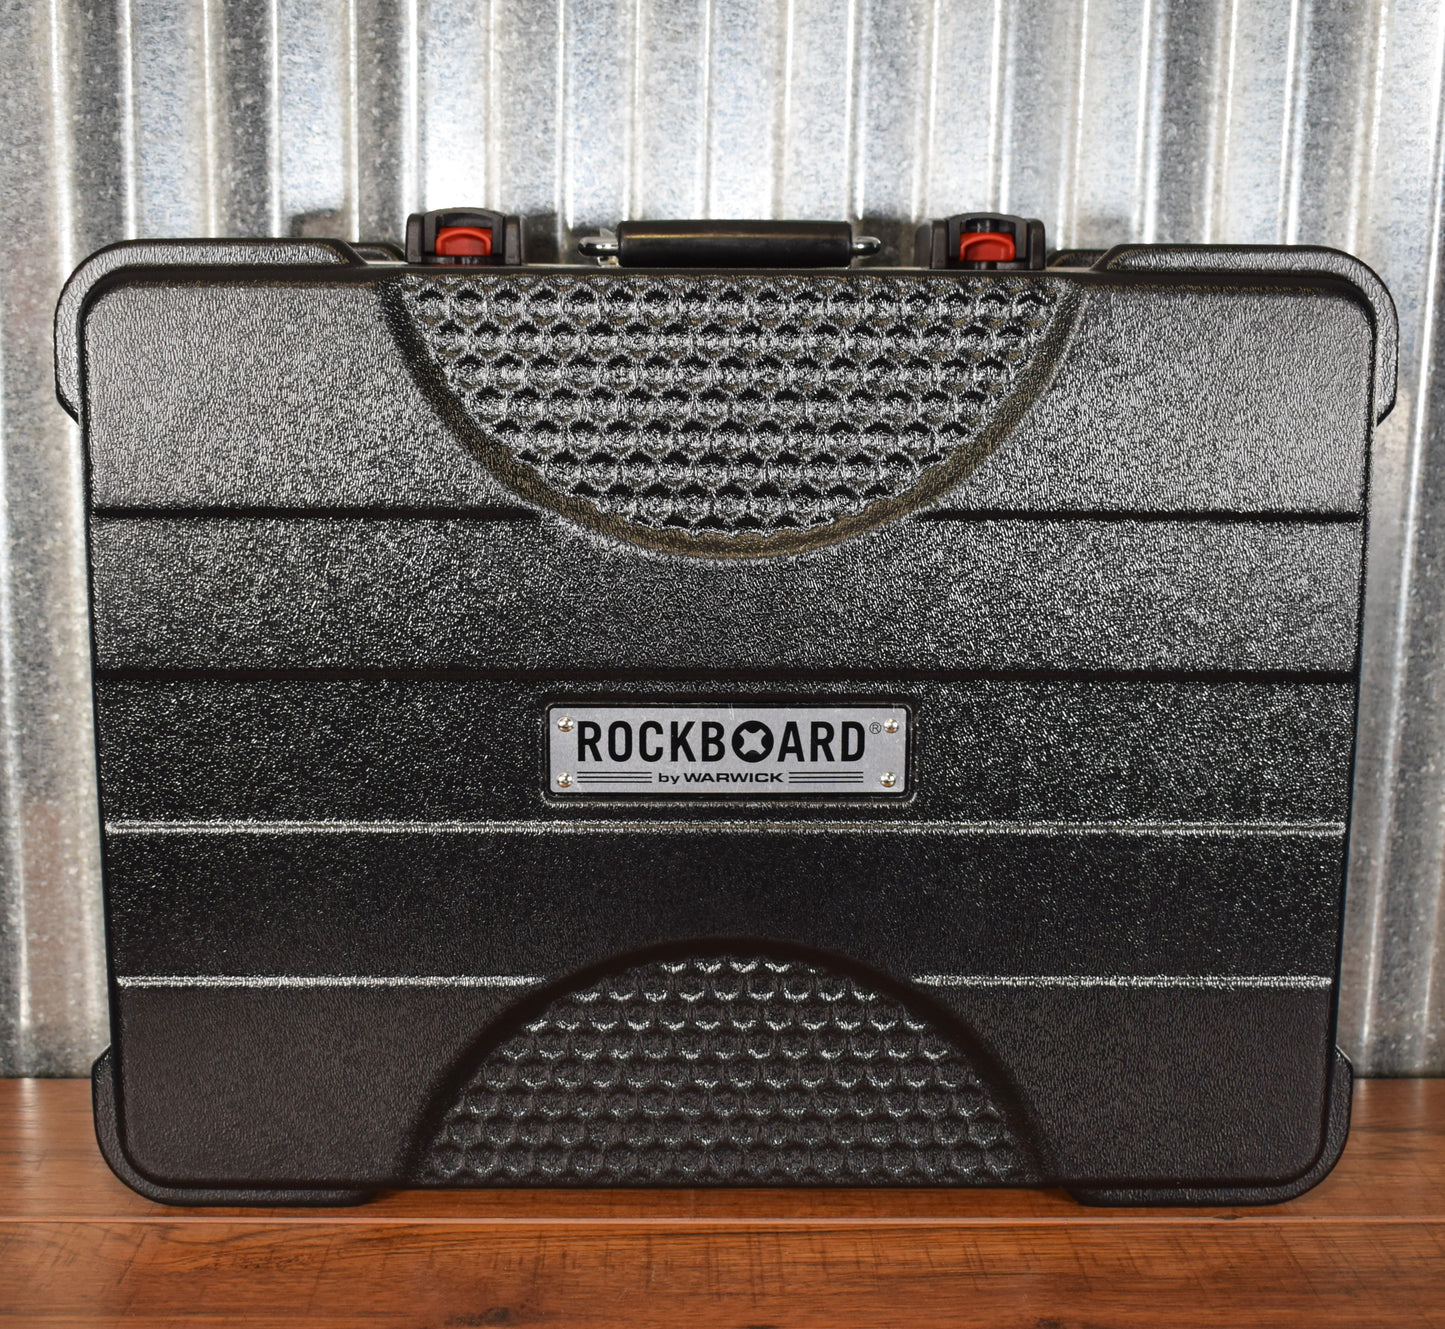 Warwick Rockboard Quad 4.1 A Guitar Effect Pedalboard & ABS Case Demo